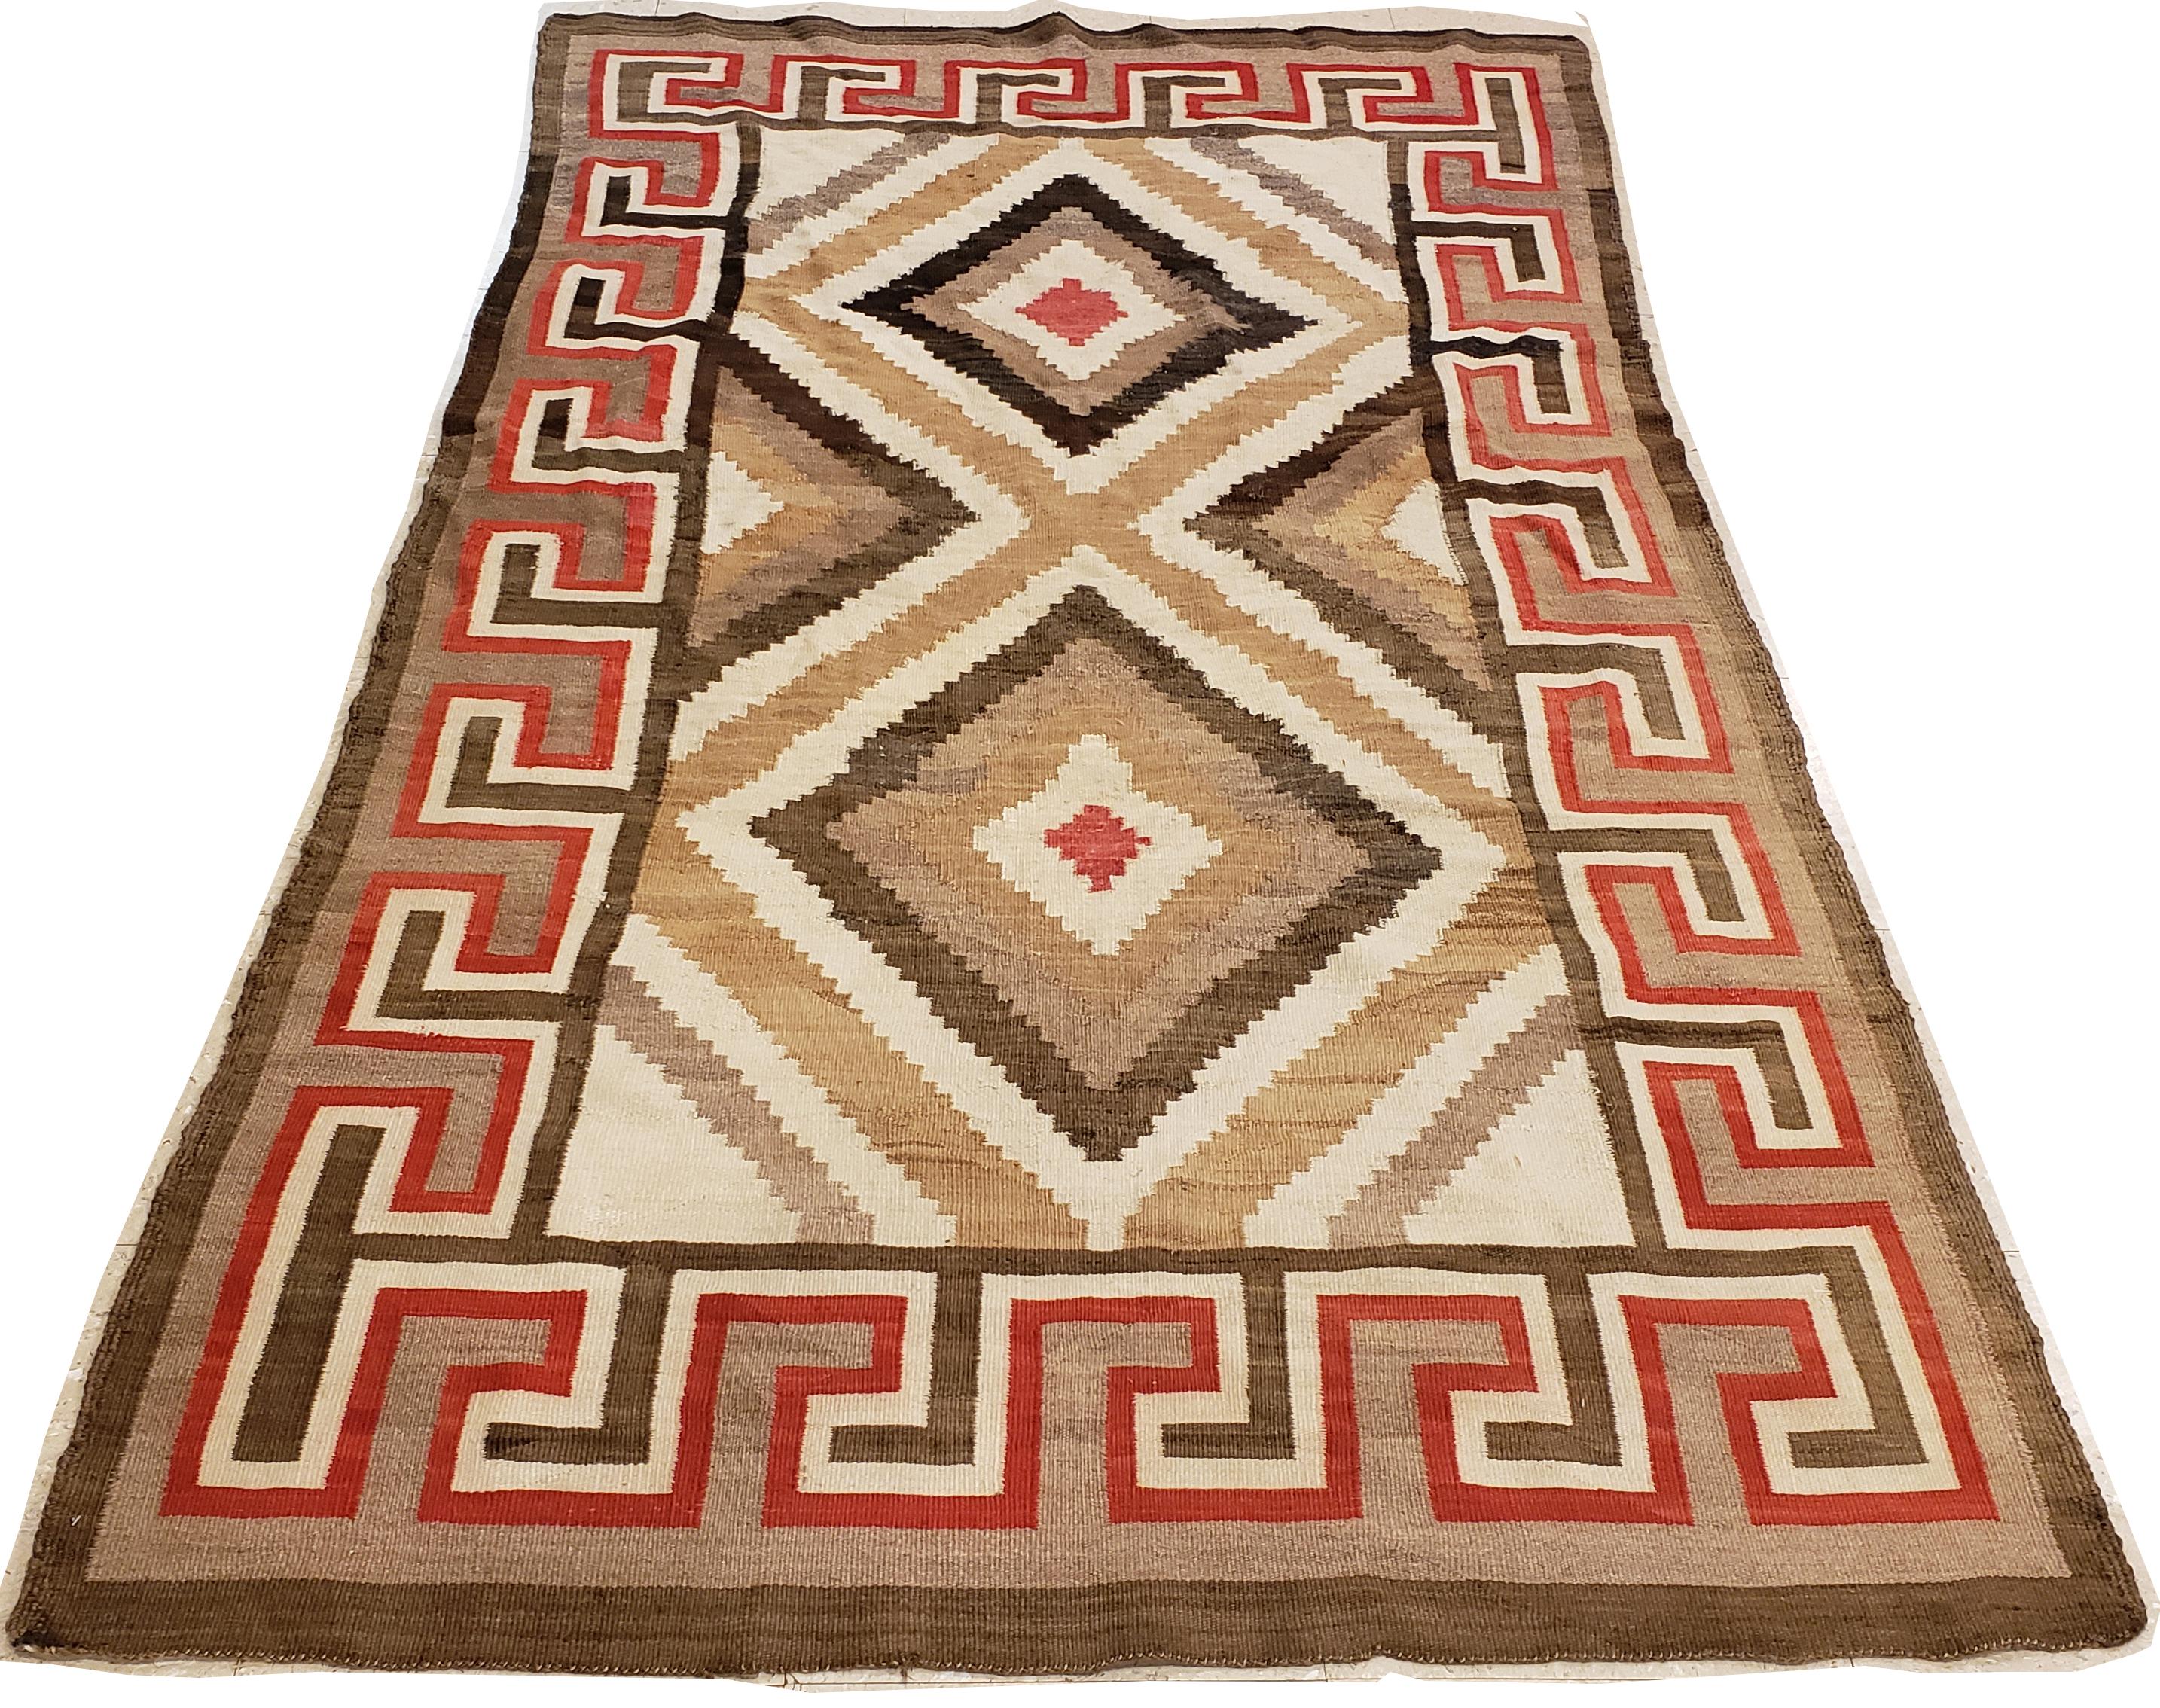 Hand-Knotted Antique Eye Dazzler Navajo Carpet, Folk Rug, Handmade Wool, Beige, Red, Tan